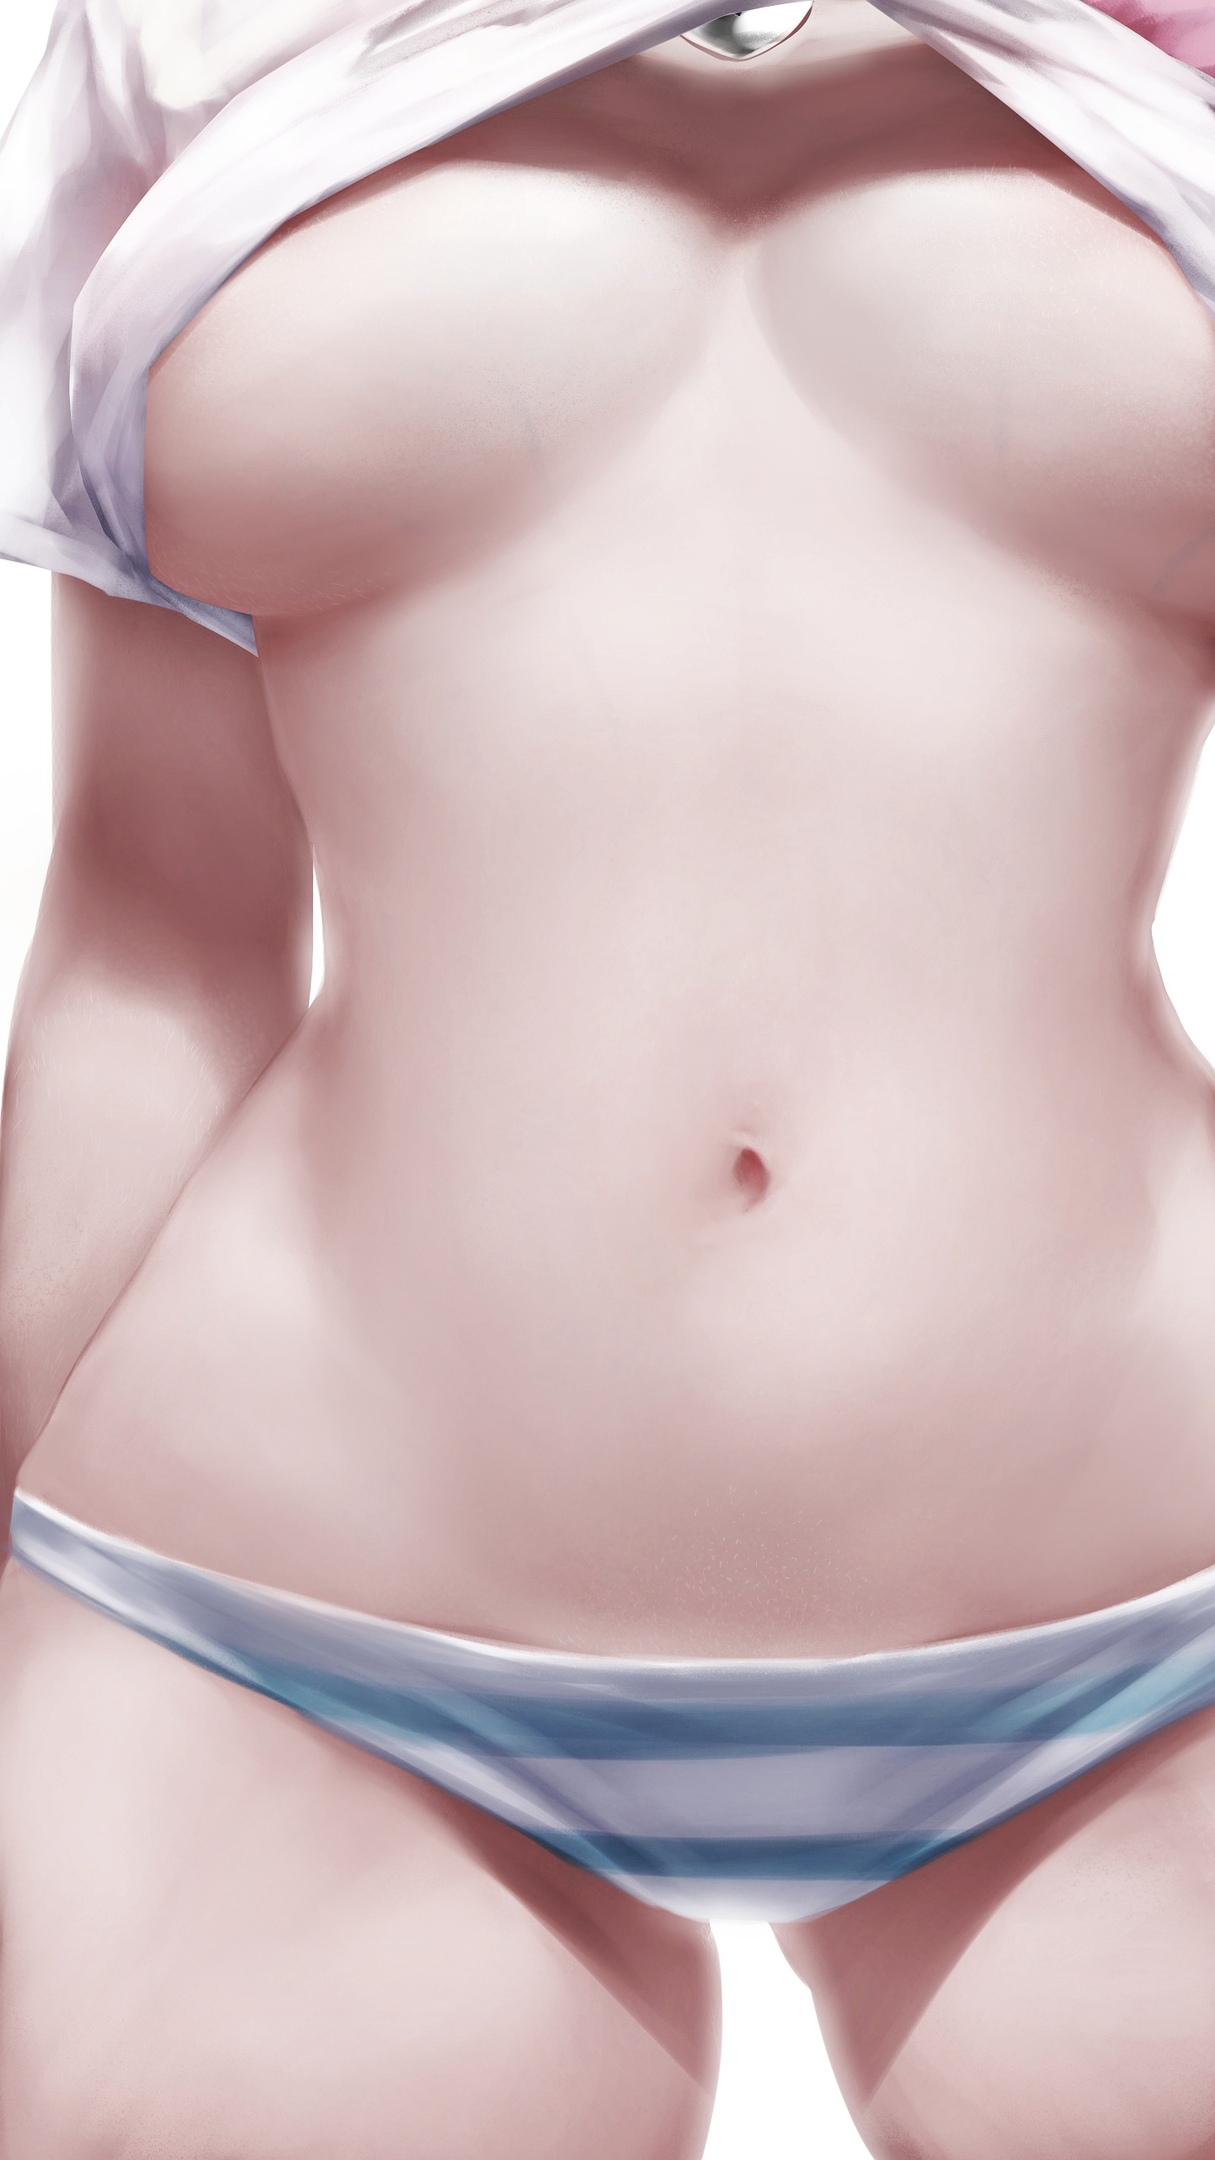 underboob, belly, undressing, Bluecup, panties, no bra, T-shirt, artwork,  THE iDOLM@STER, Riamu Yumemi, anime girls